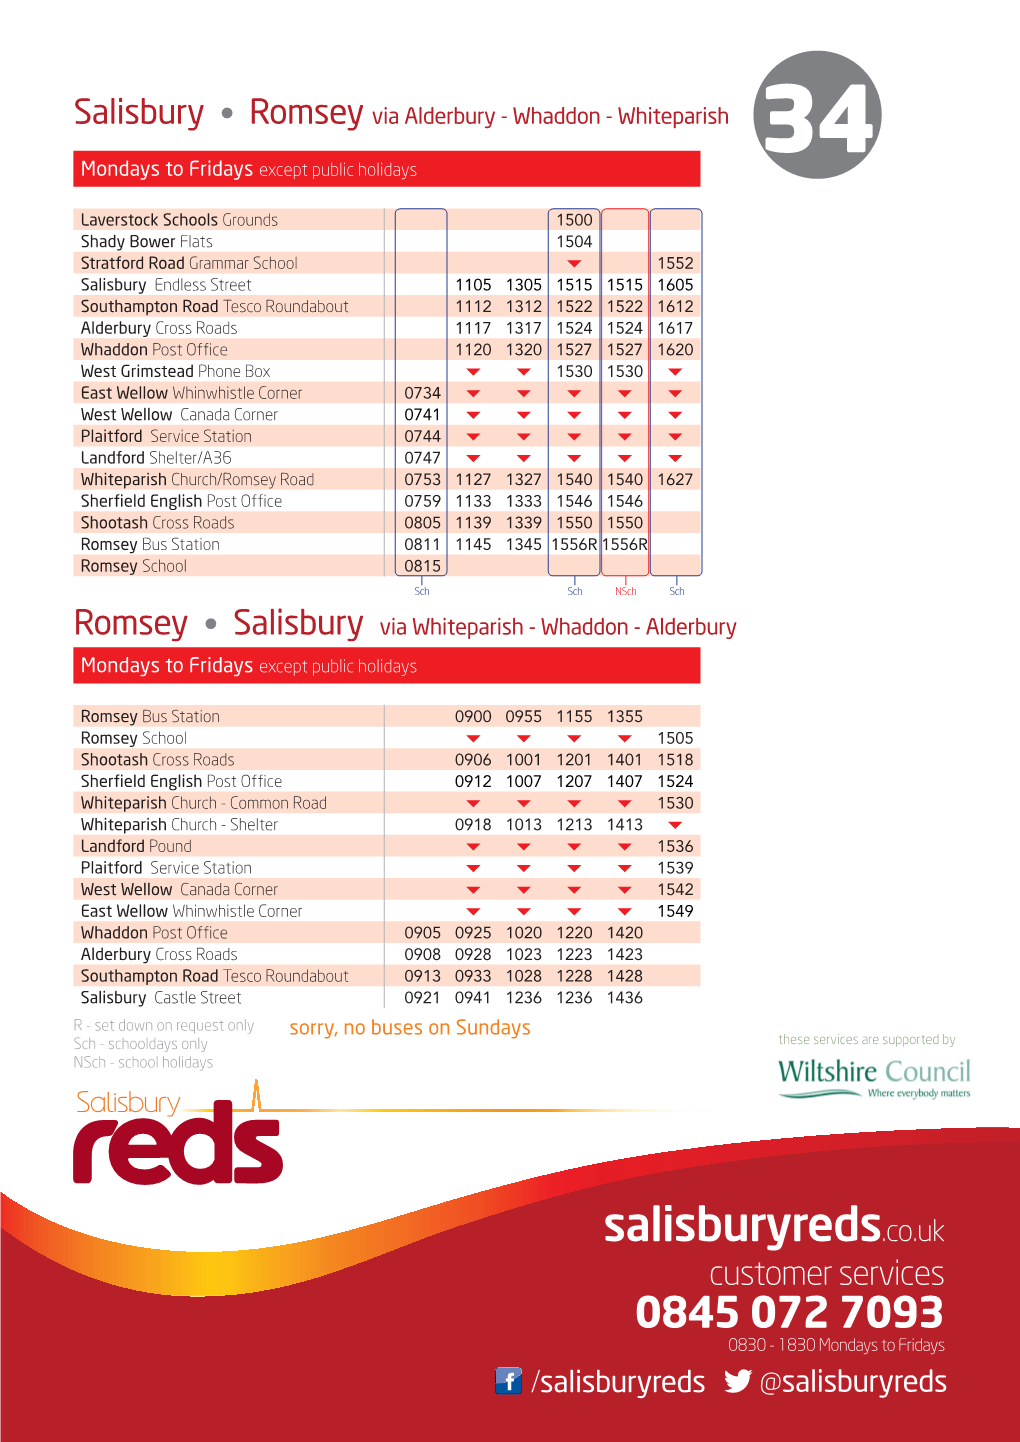 Salisbury • Romsey Via Alderbury - Whaddon - Whiteparish 34 Mondays to Fridays Except Public Holidays